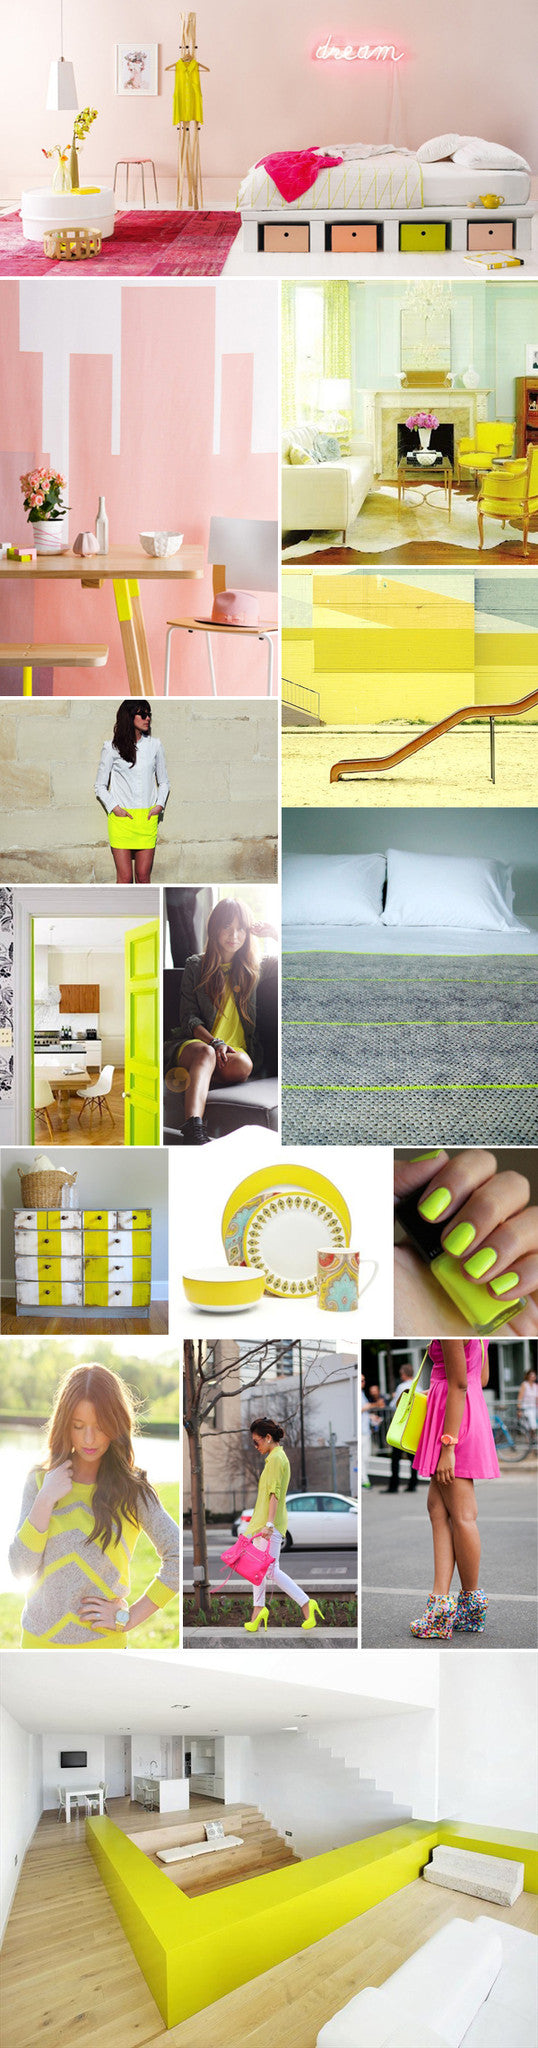 Trendsday: Neon Yellow